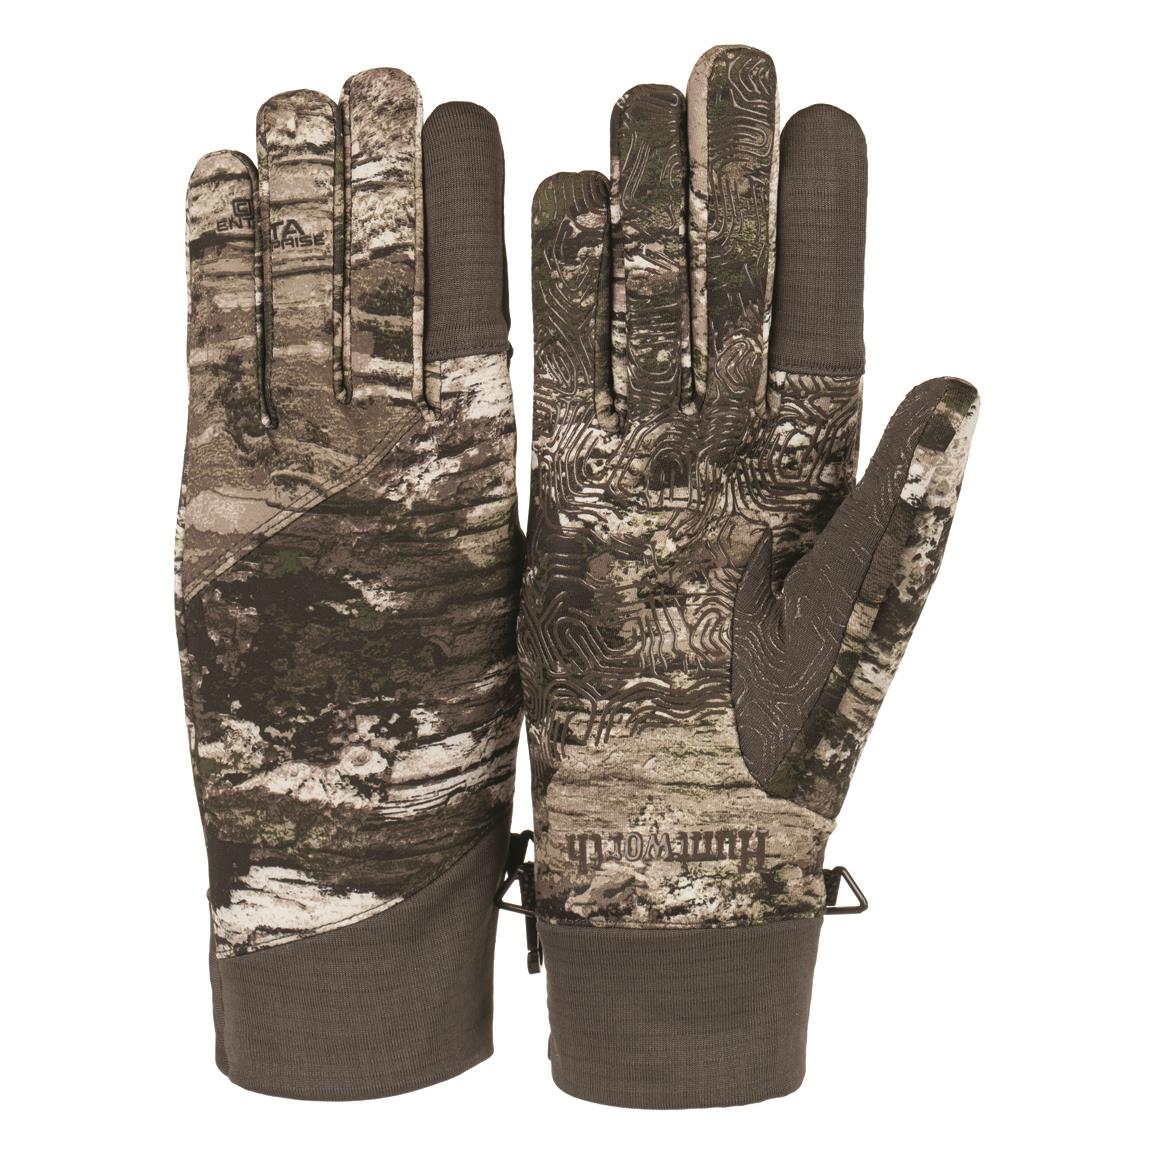 Huntworth Men's Lightweight Hybrid Hunting Gloves, Tarnen